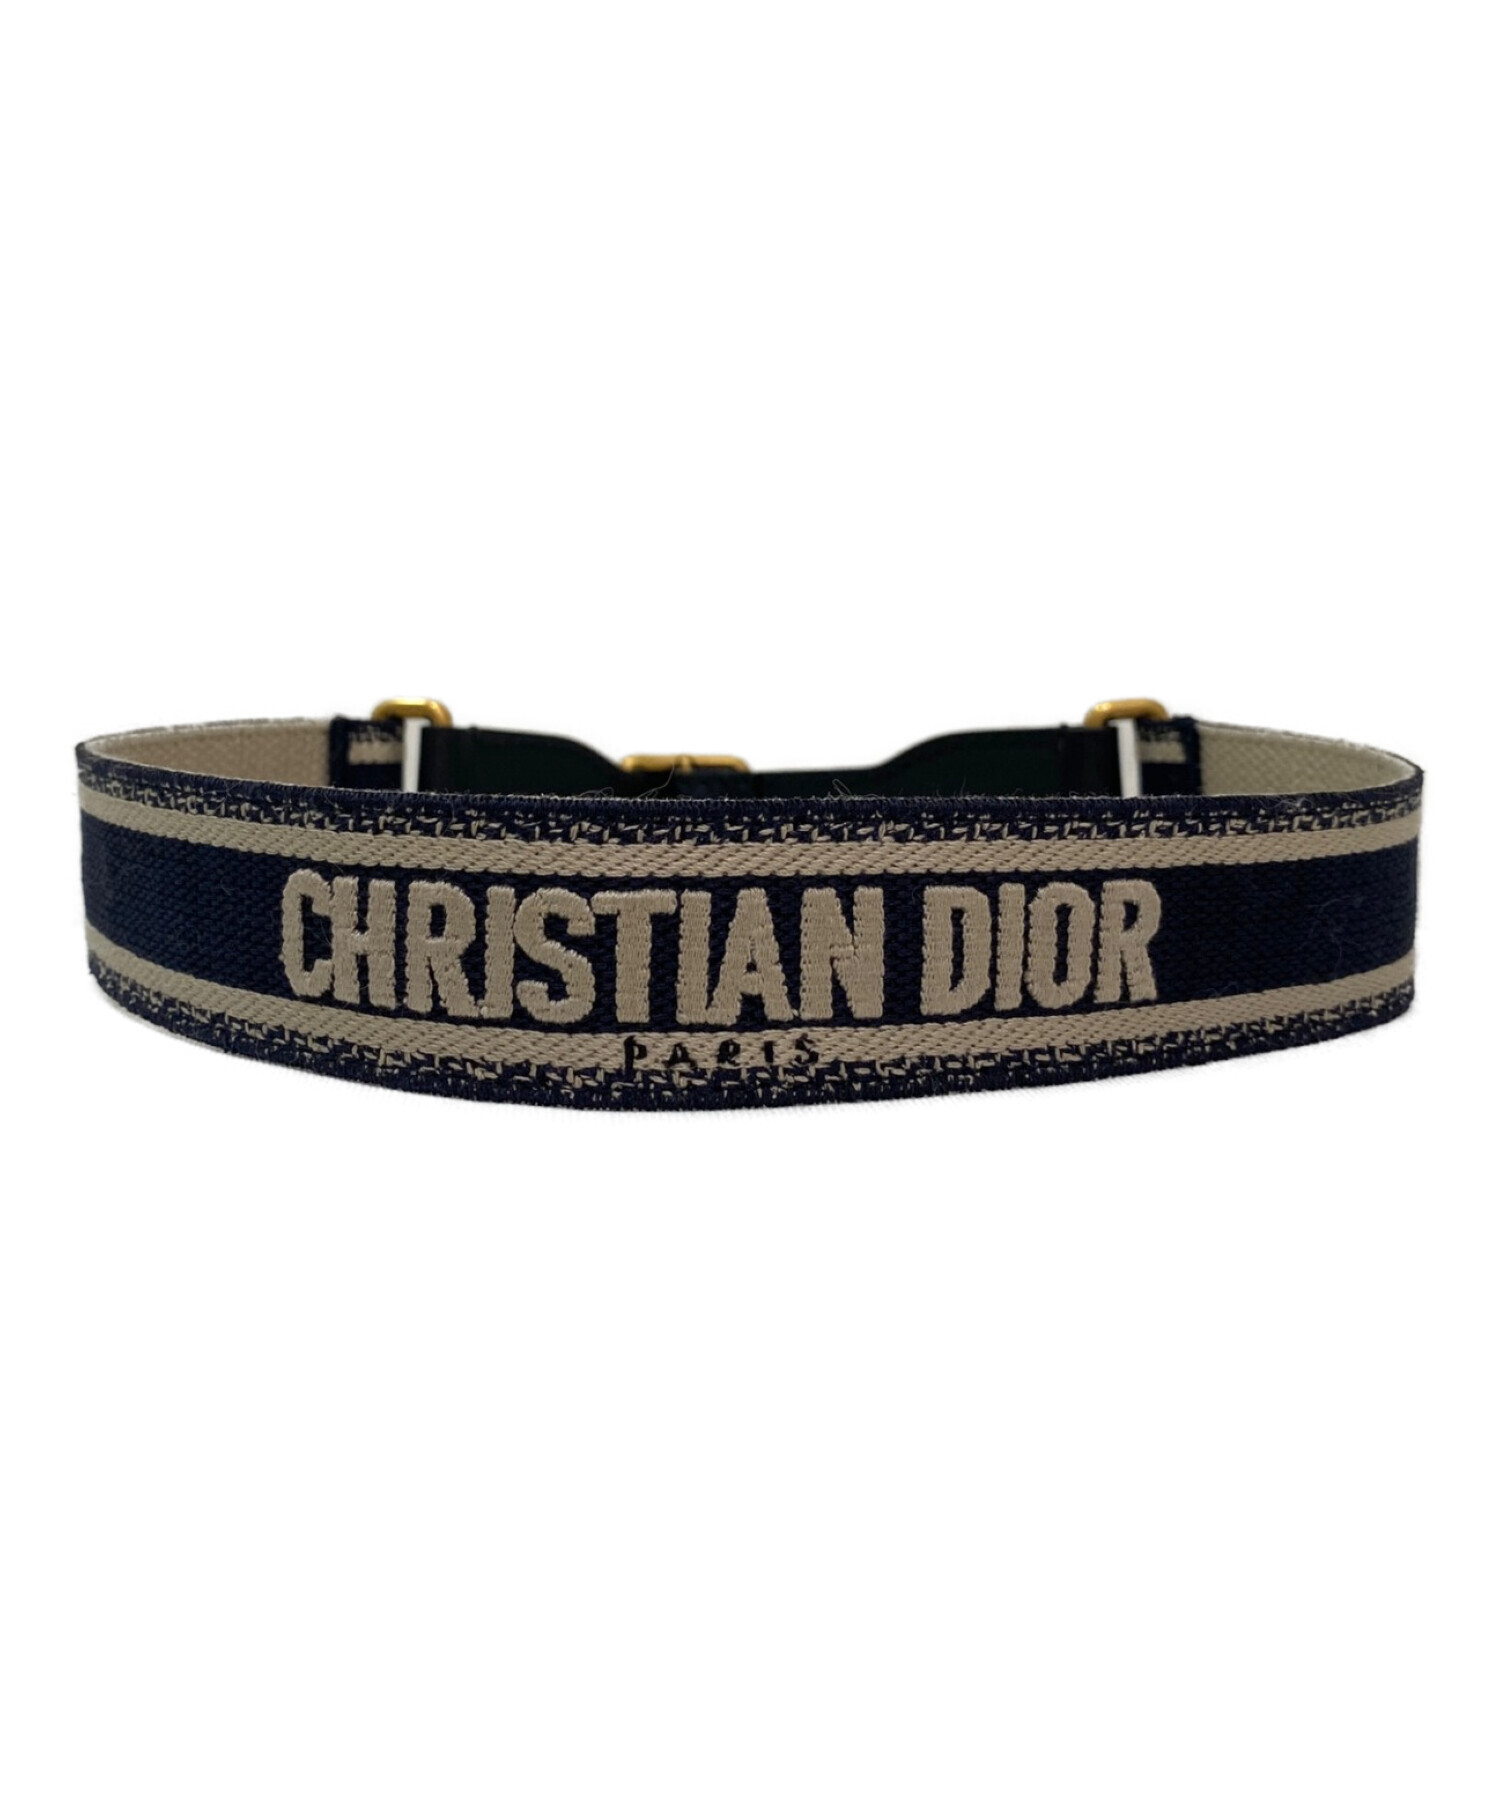 Christian Dior (クリスチャン ディオール) エンブロダイリーキャンバスベルト ネイビー×アイボリー